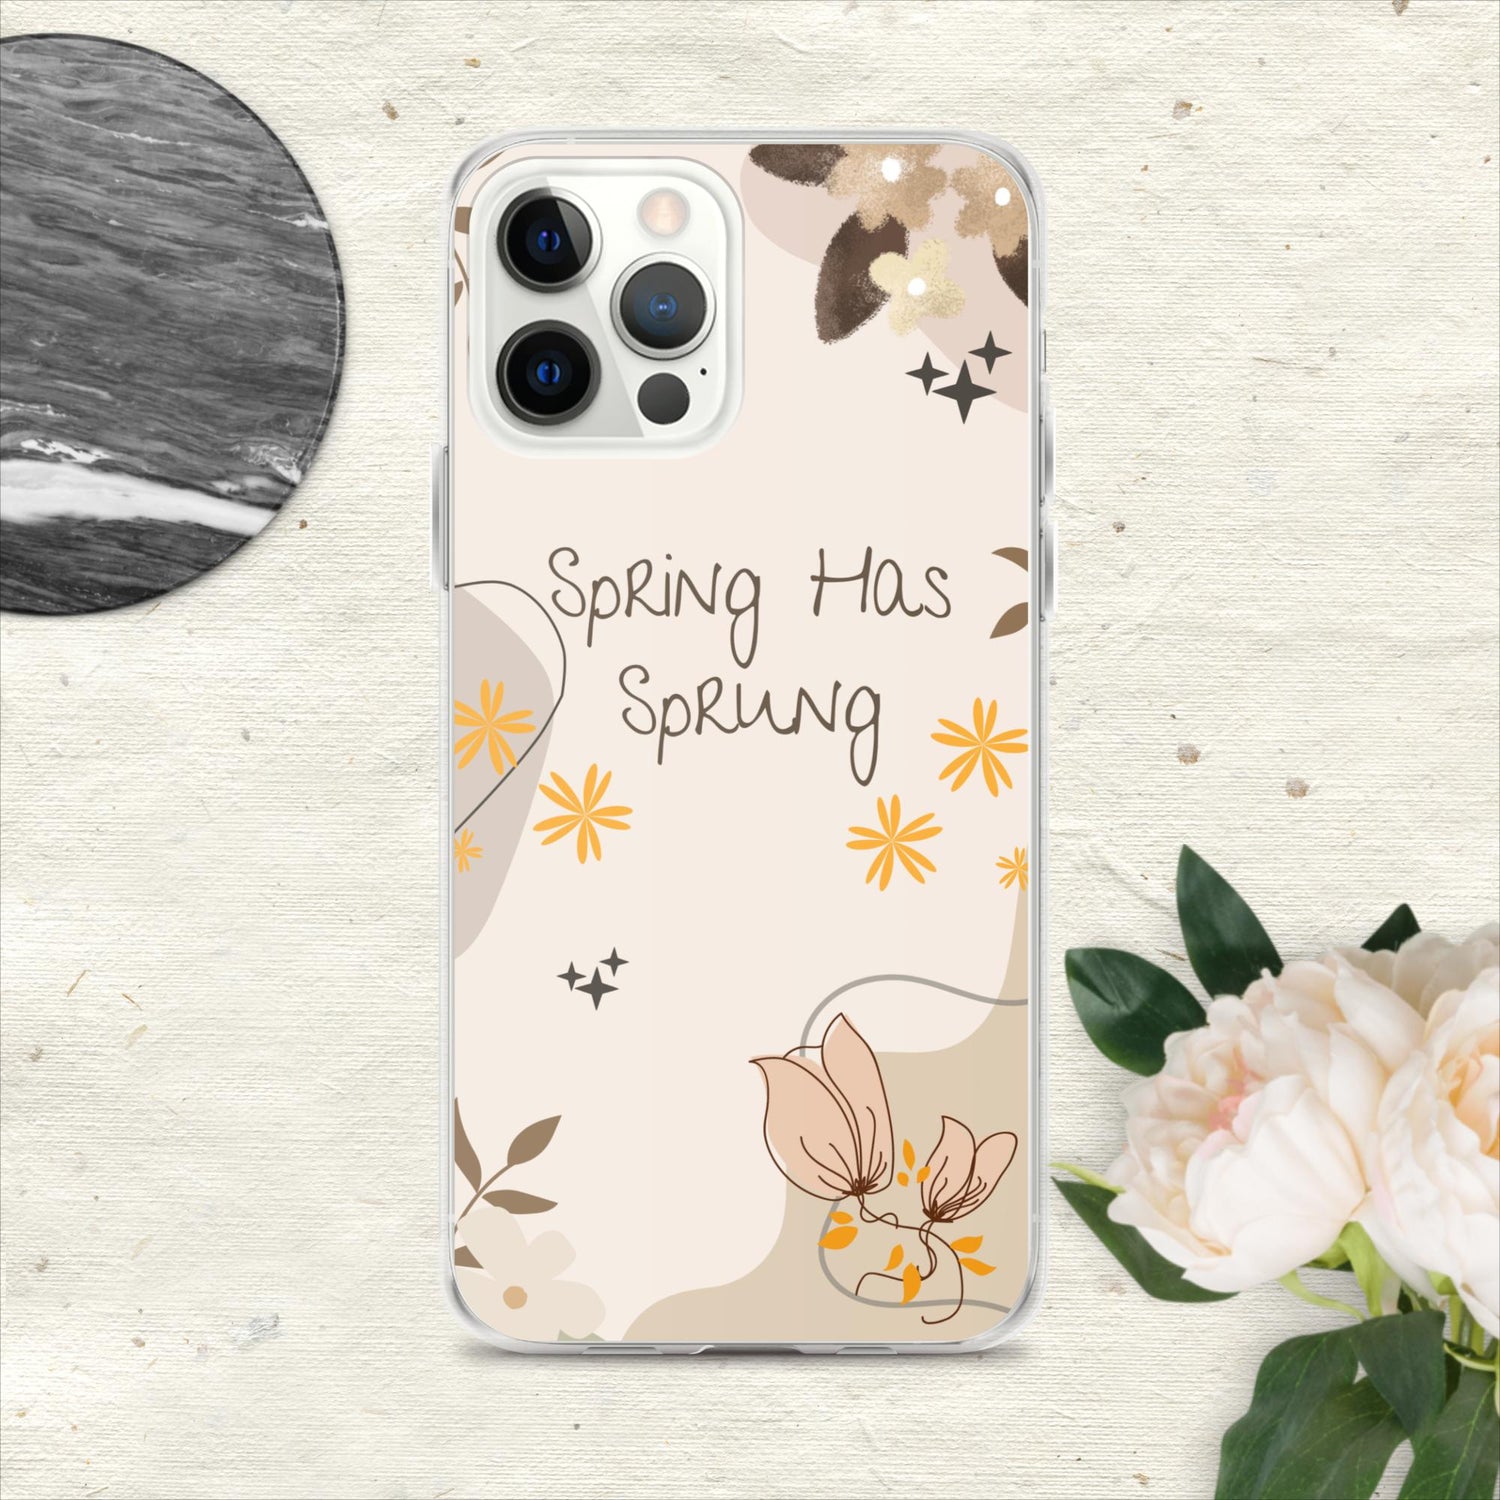 Spring Has Sprung - Iphone Case